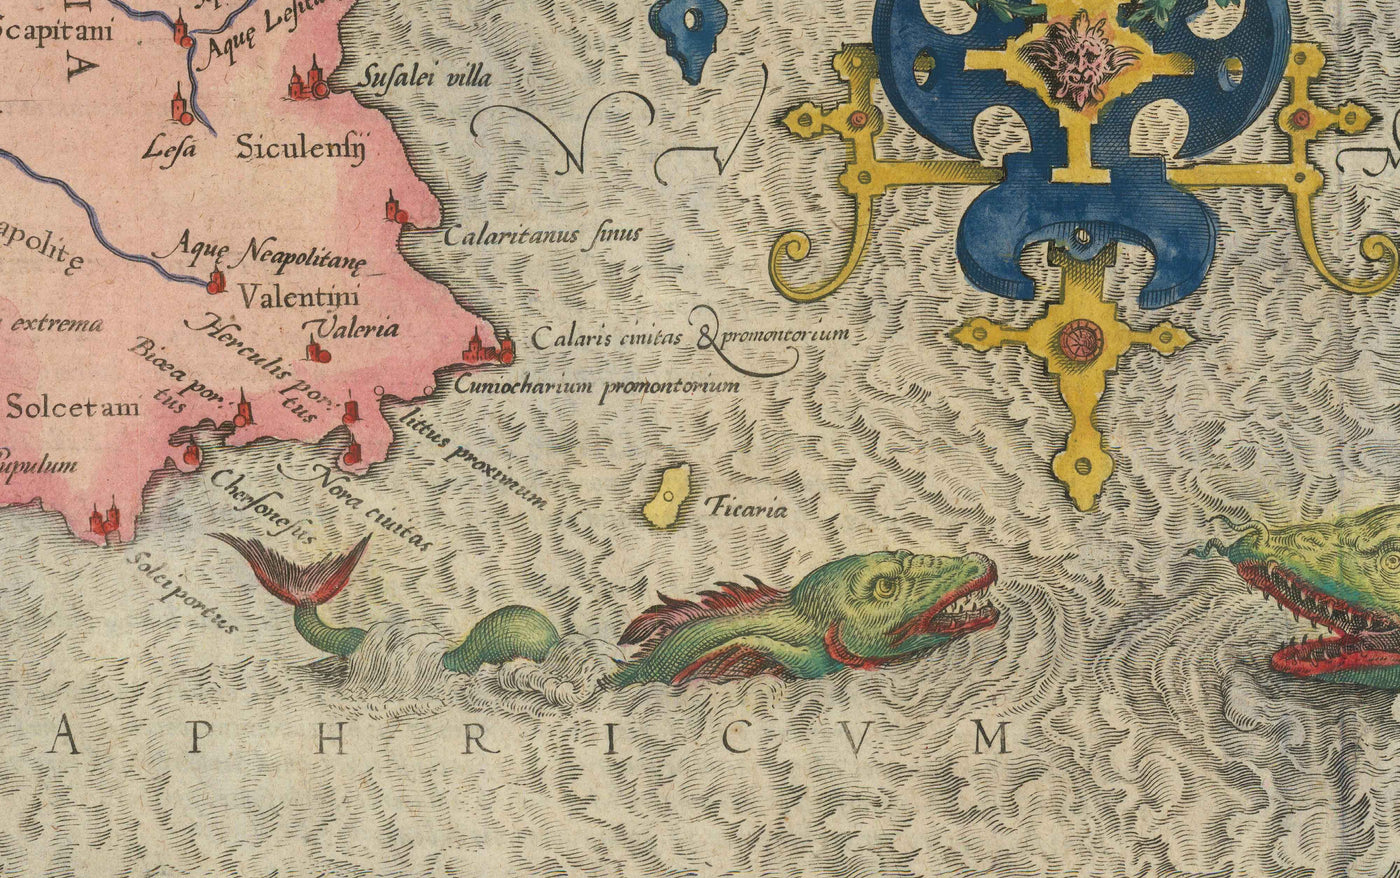 Old Map of Sardinia and Sicily in 1584 by Gerard Mercator - Italy, Cagliari, Catania, Palermo, Sassari